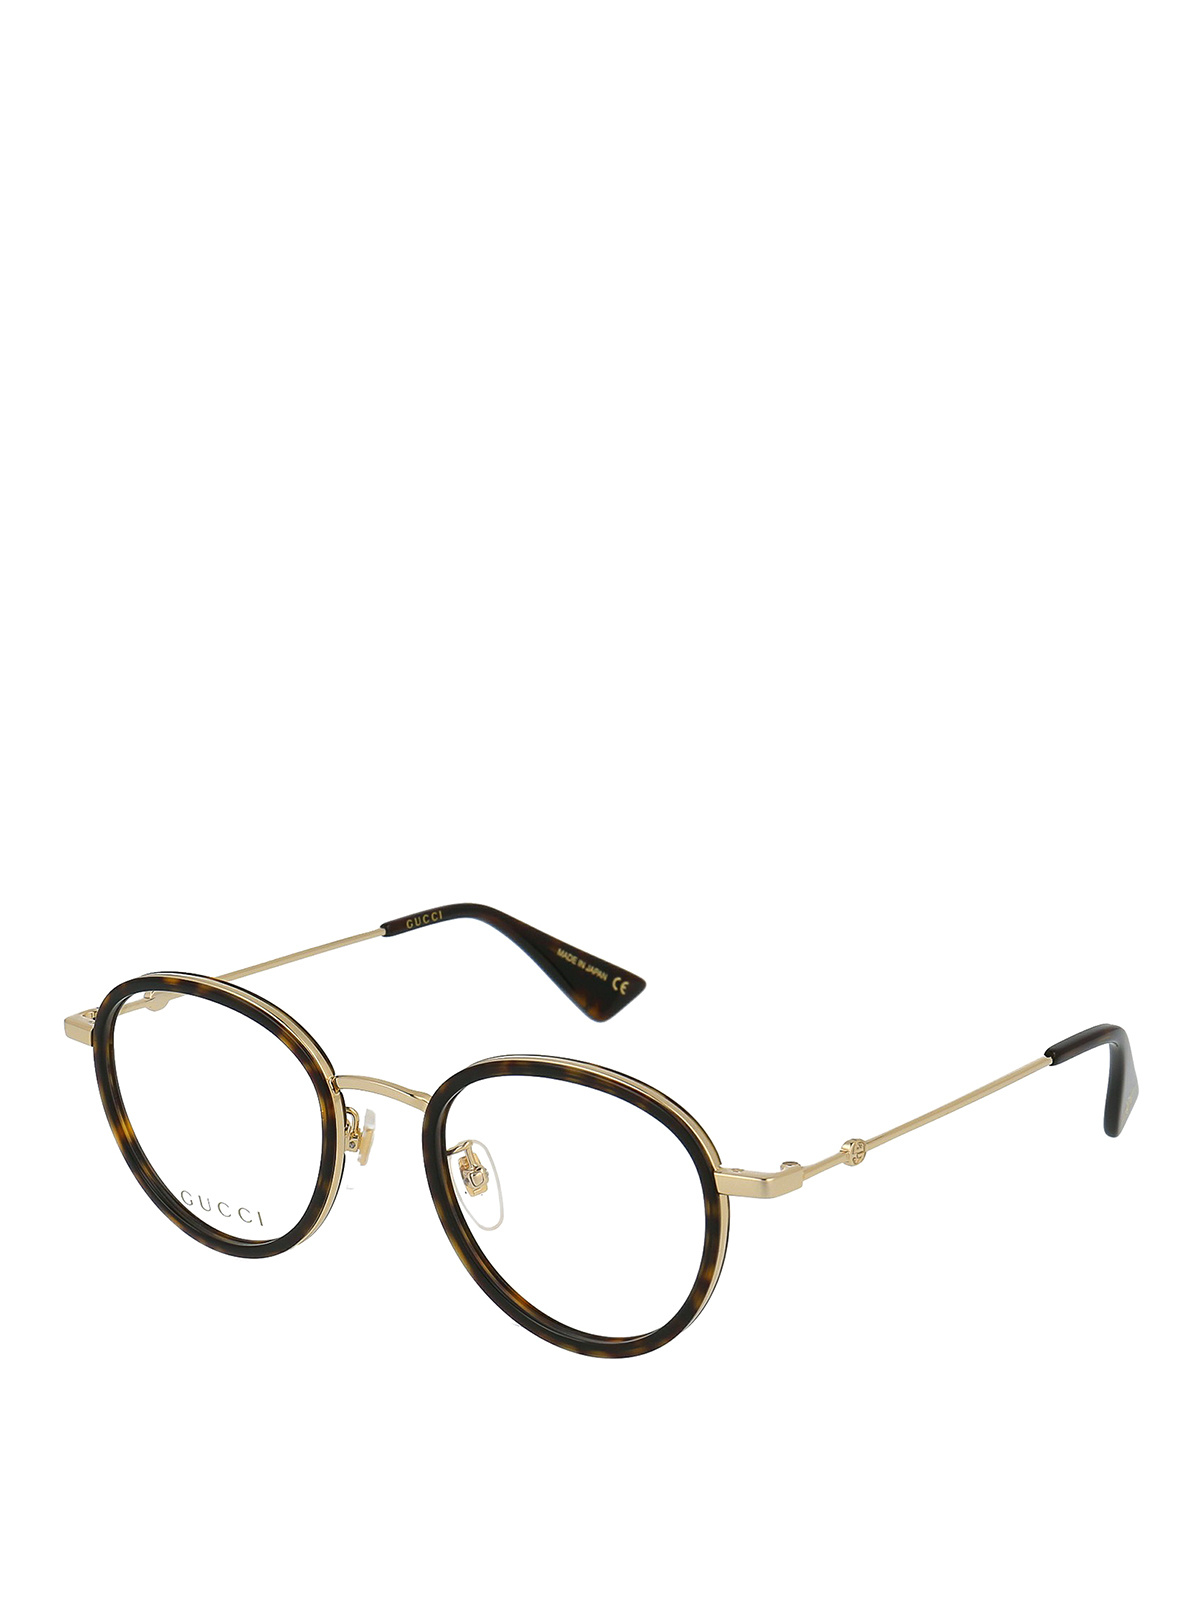 gucci havana gold eyeglasses